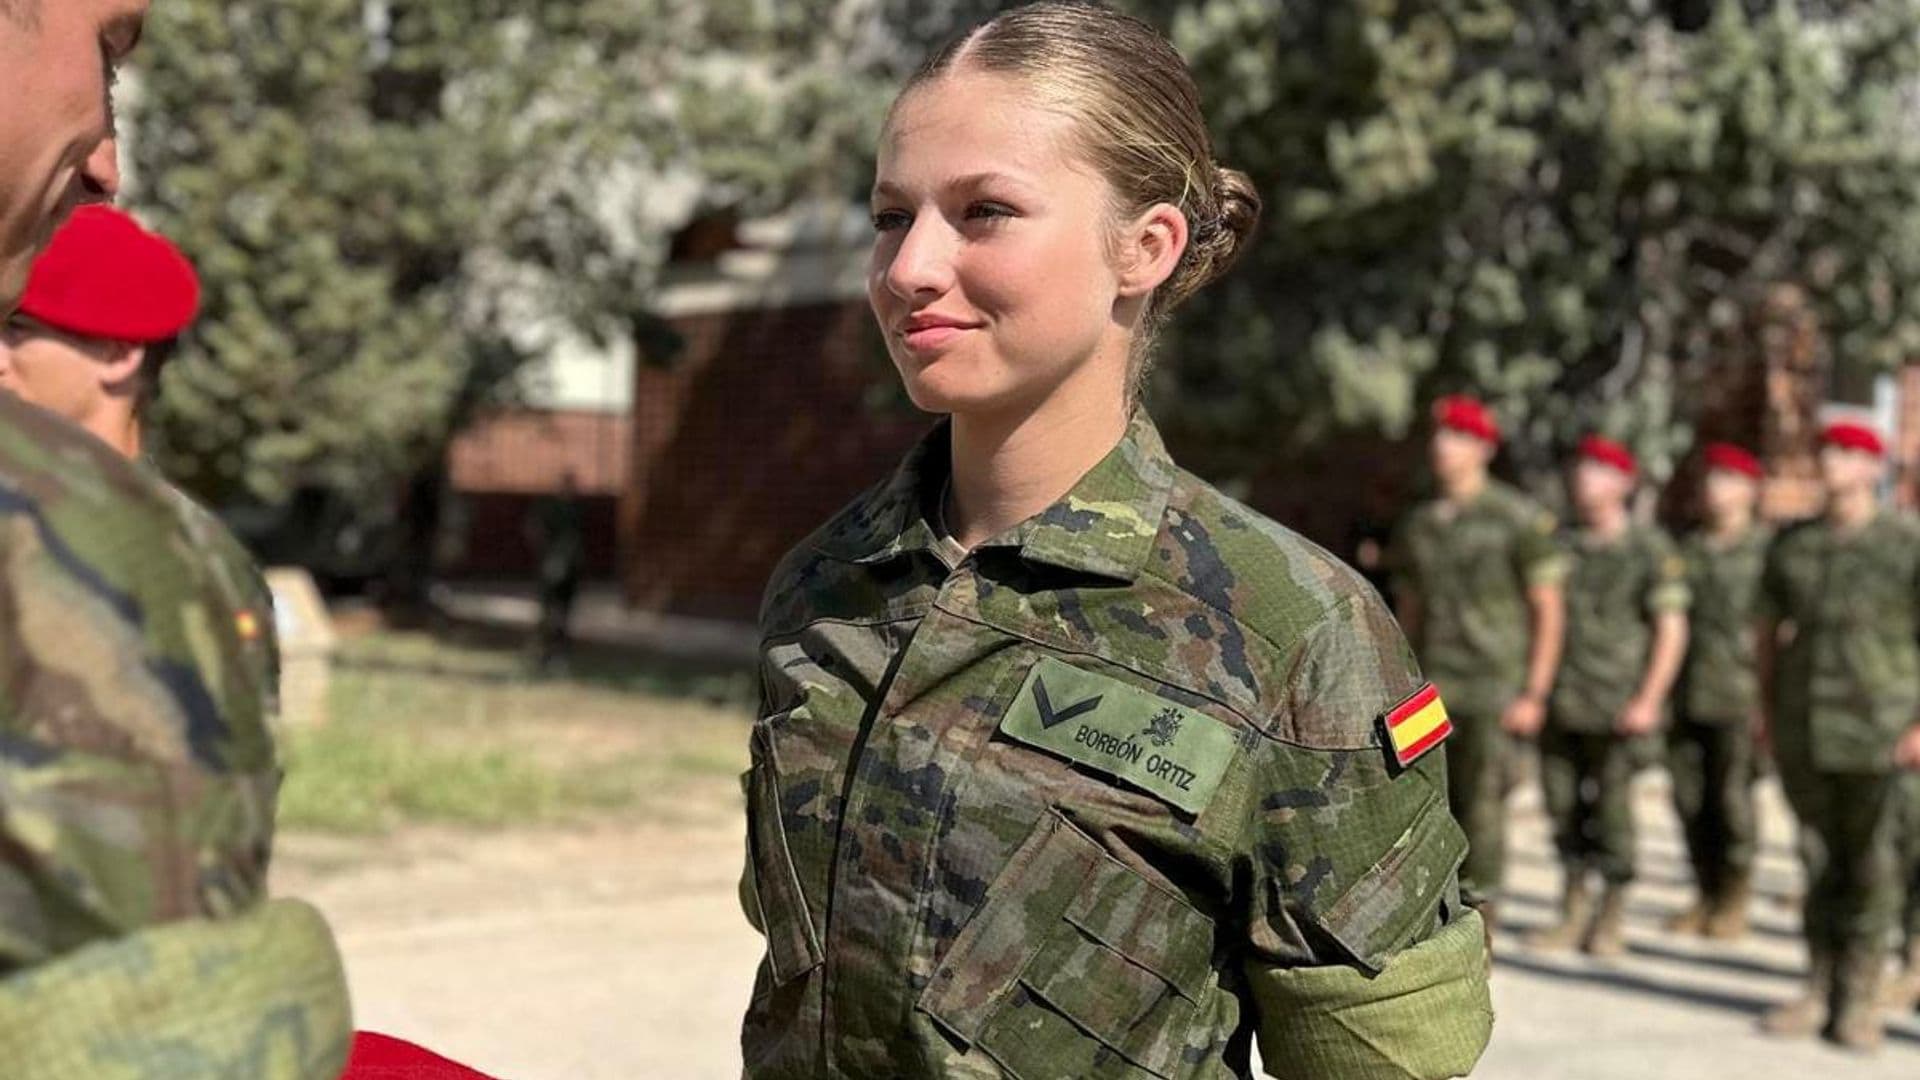 Photos of Princess Leonor’s basic military training released